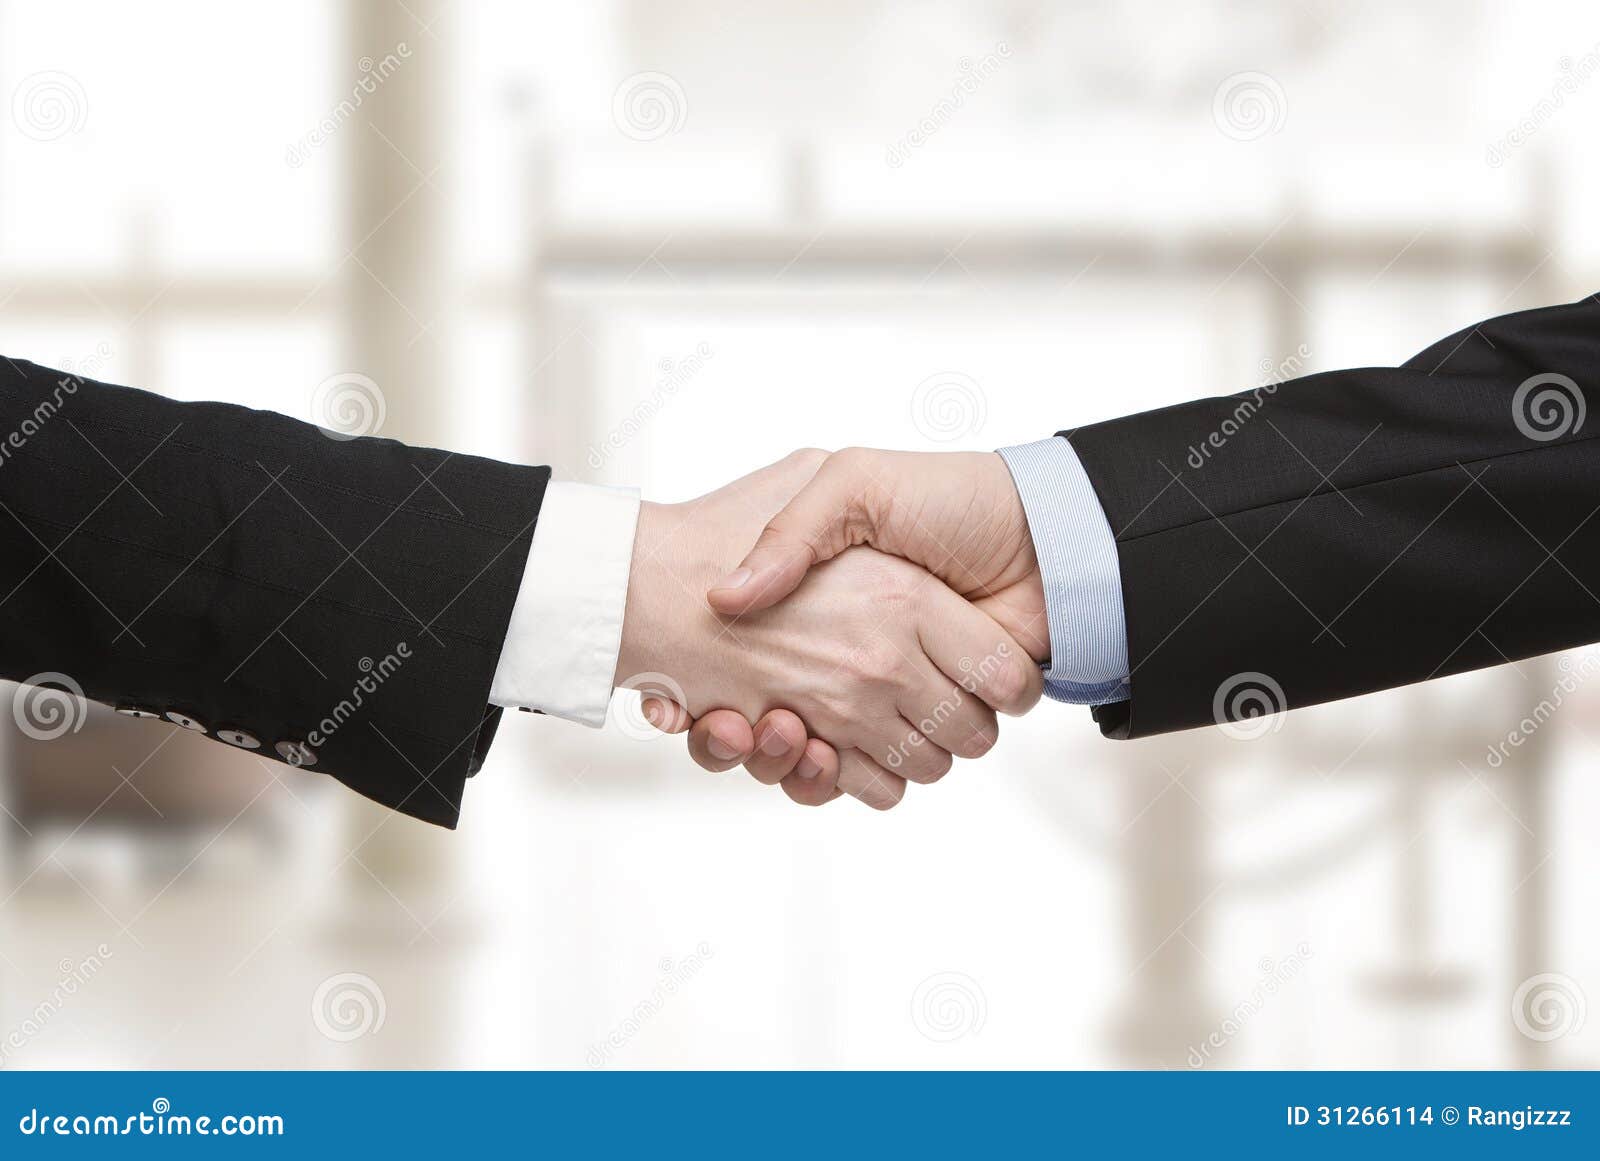 Cooperation agreement